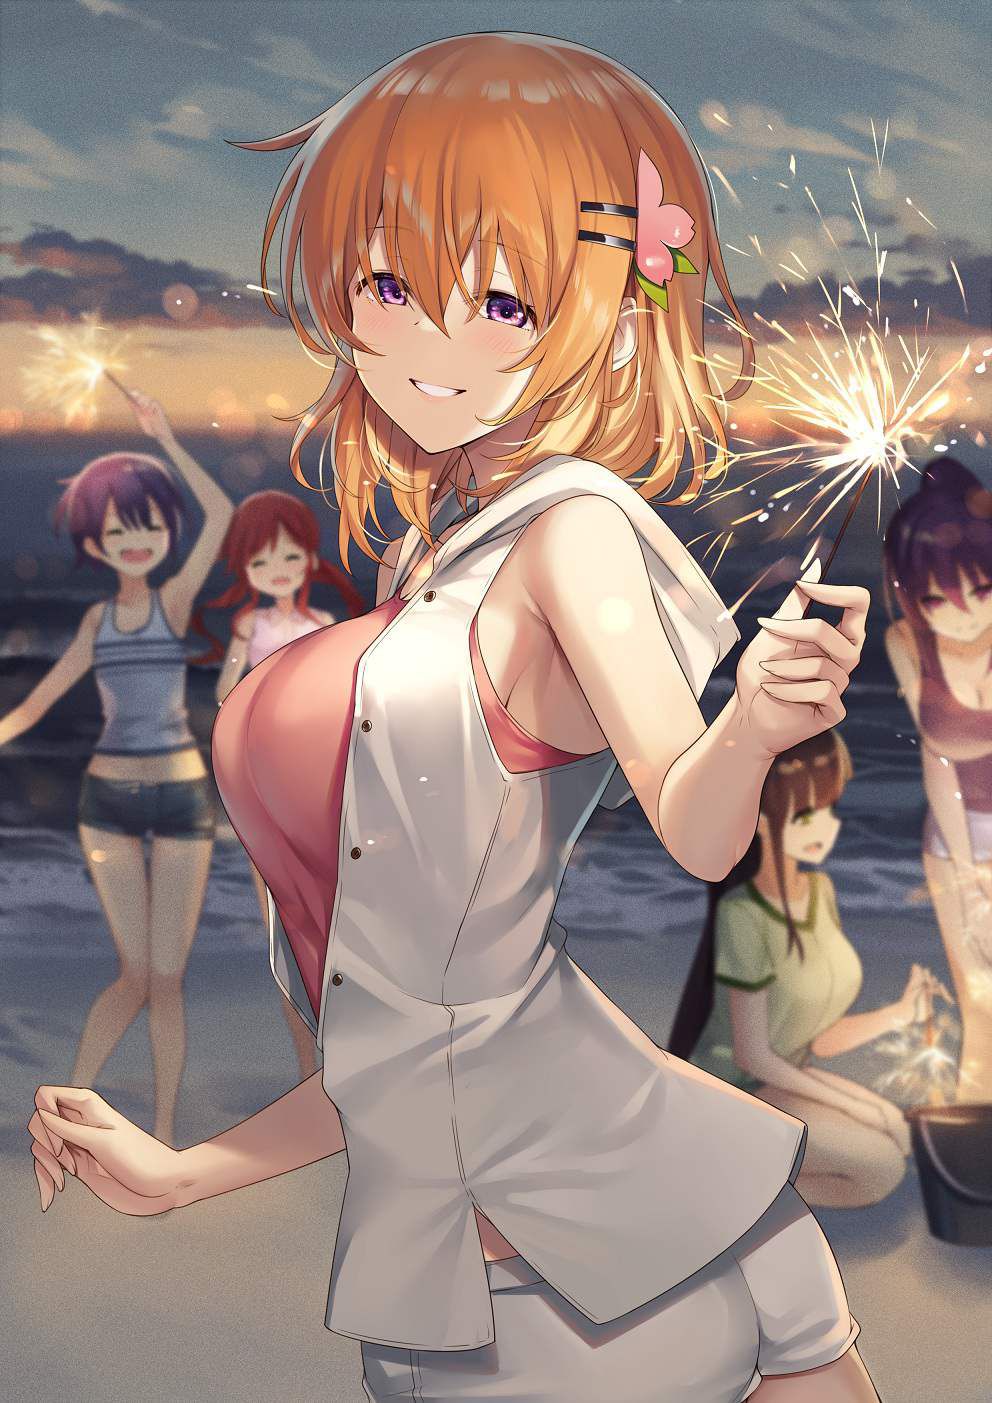 【Summer Tradition】Secondary image of girls enjoying hand-held fireworks 13